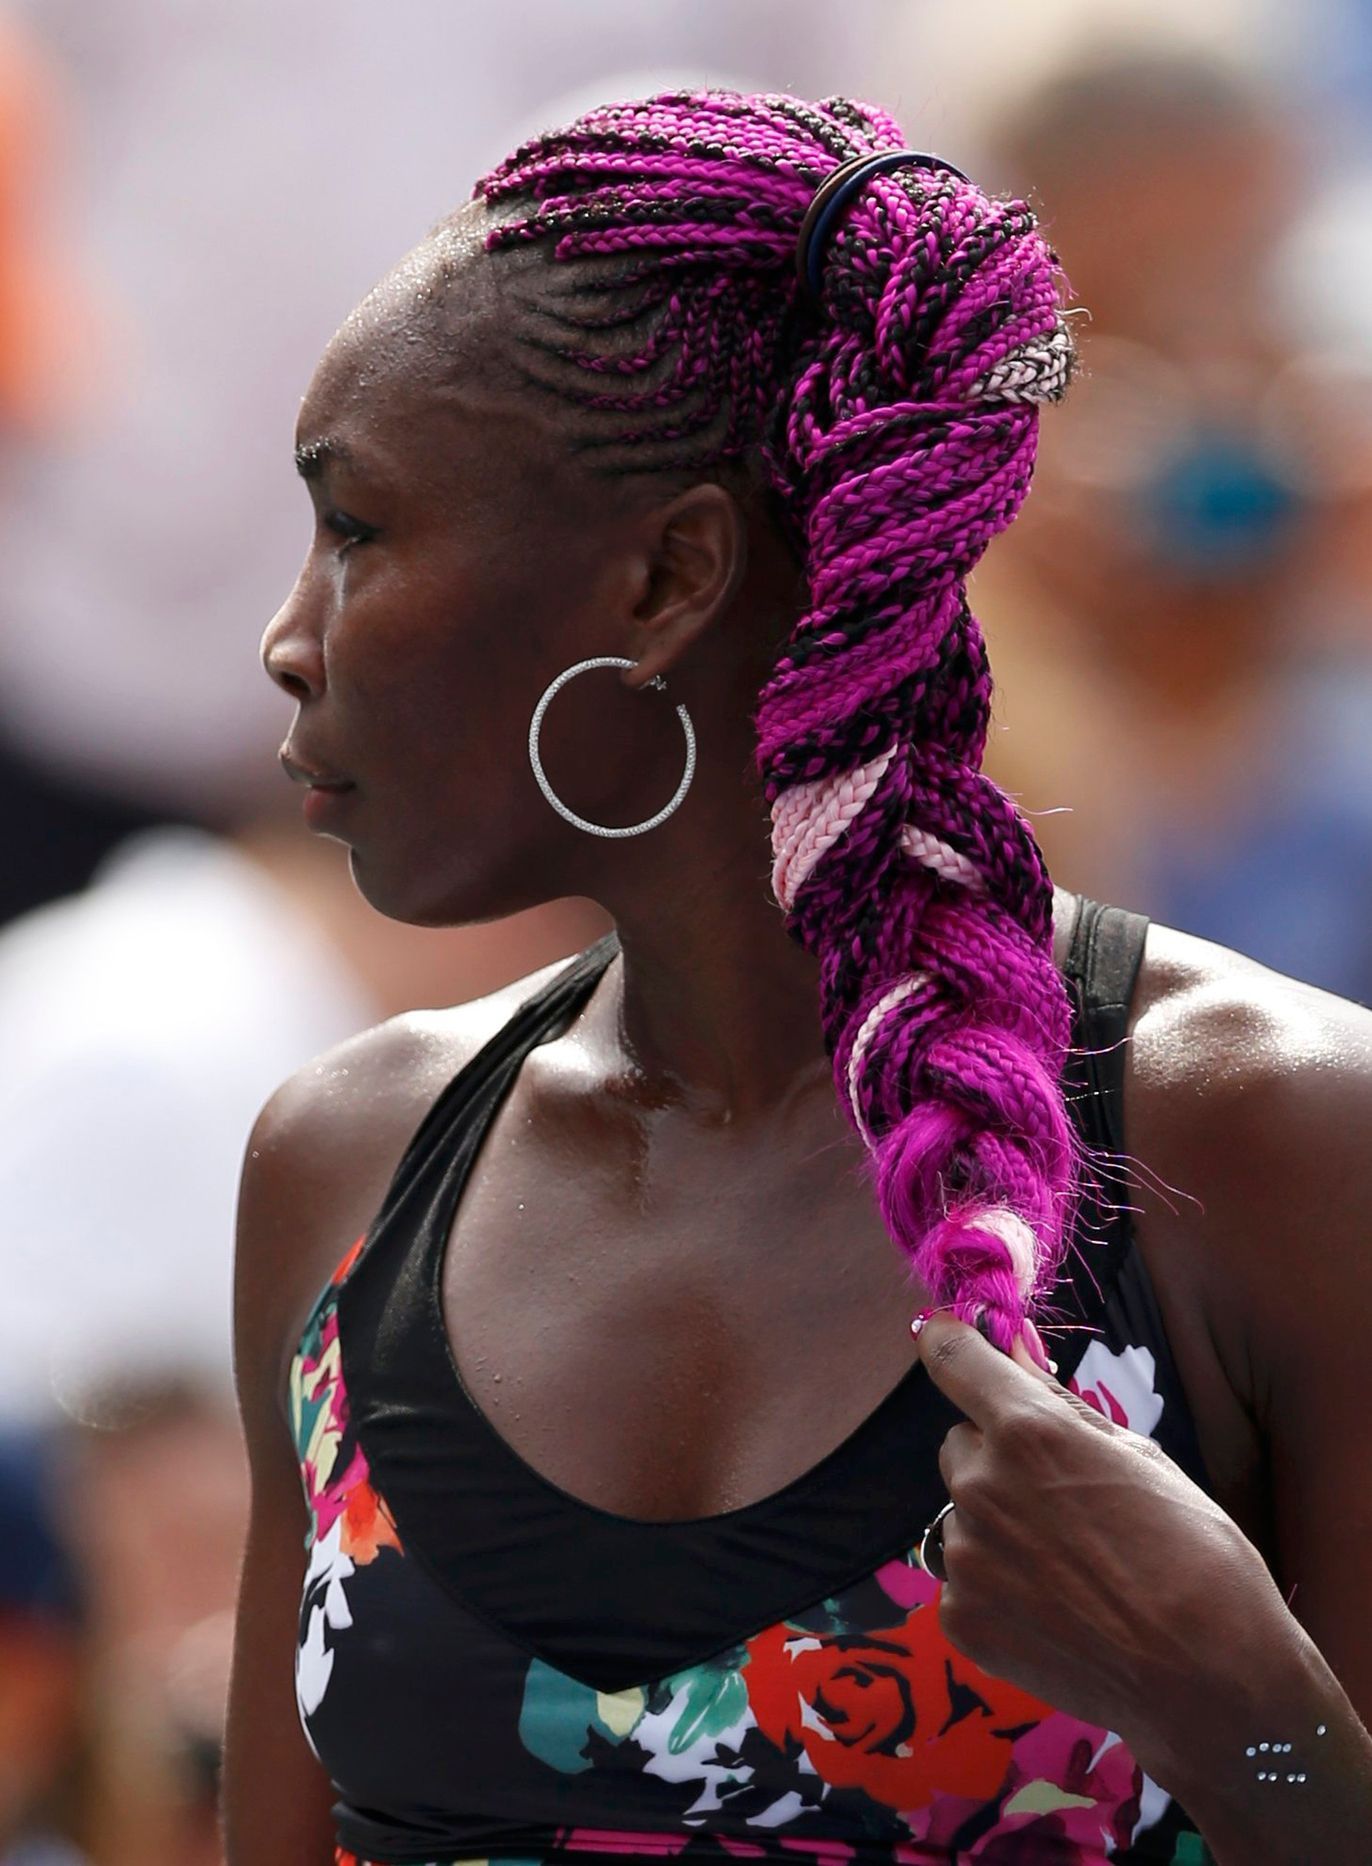 Venus Williamsová na US Open